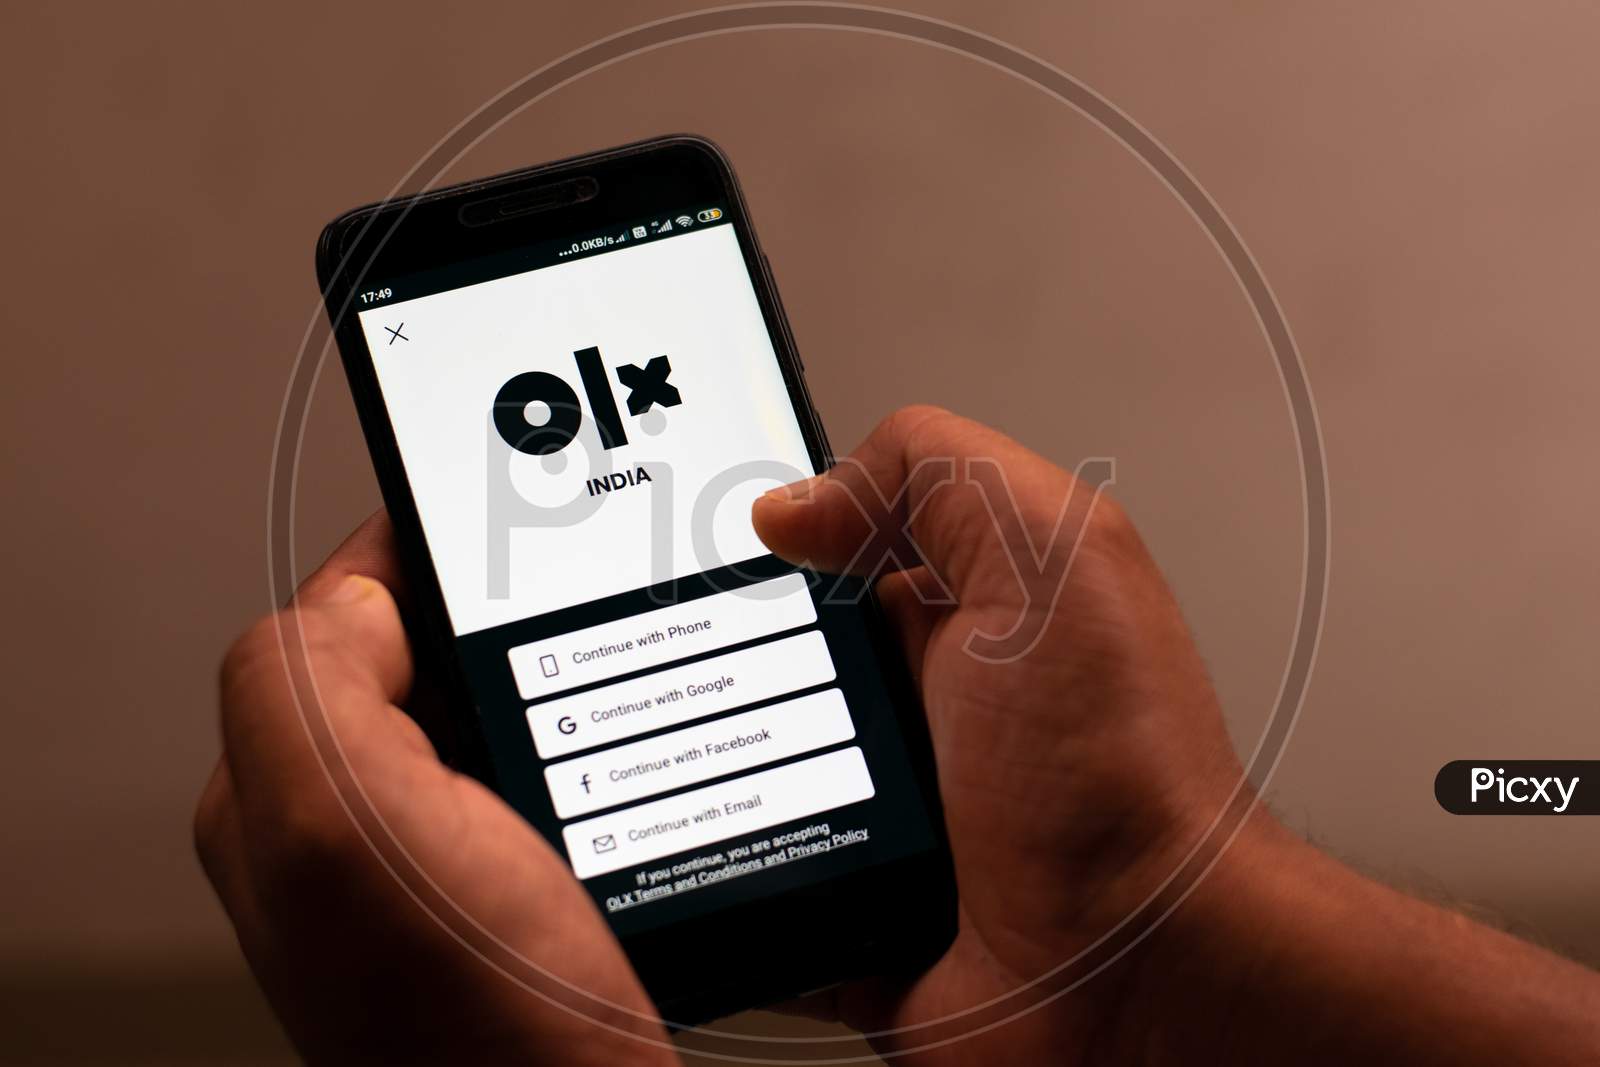 OLX mobile application